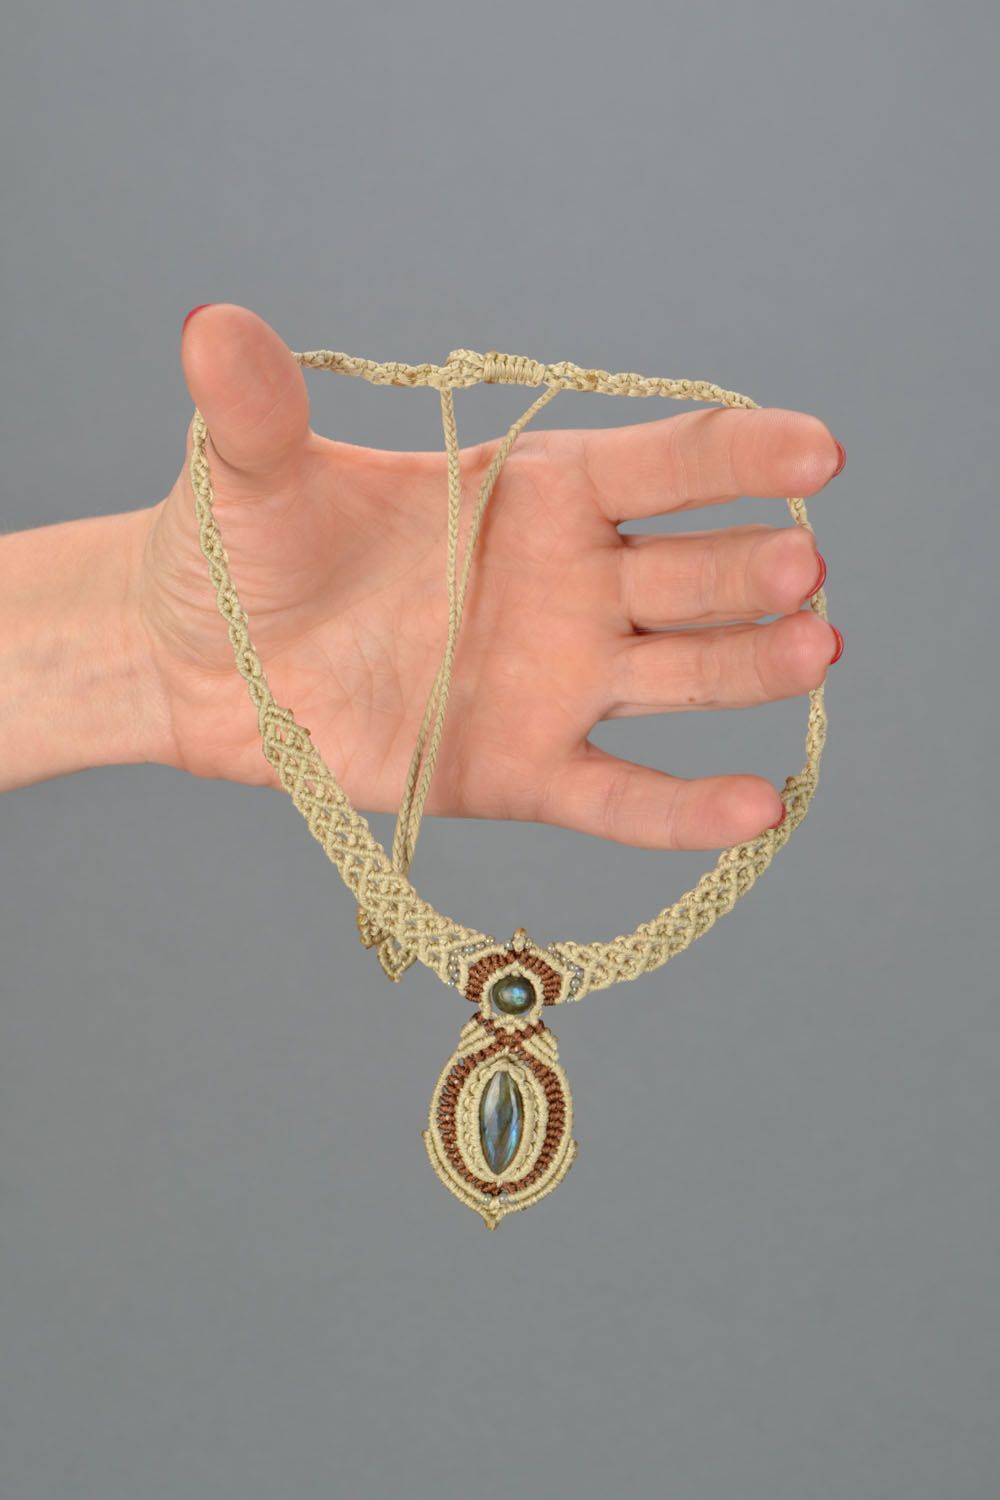 Macrame necklace with labradorite gemstone photo 2